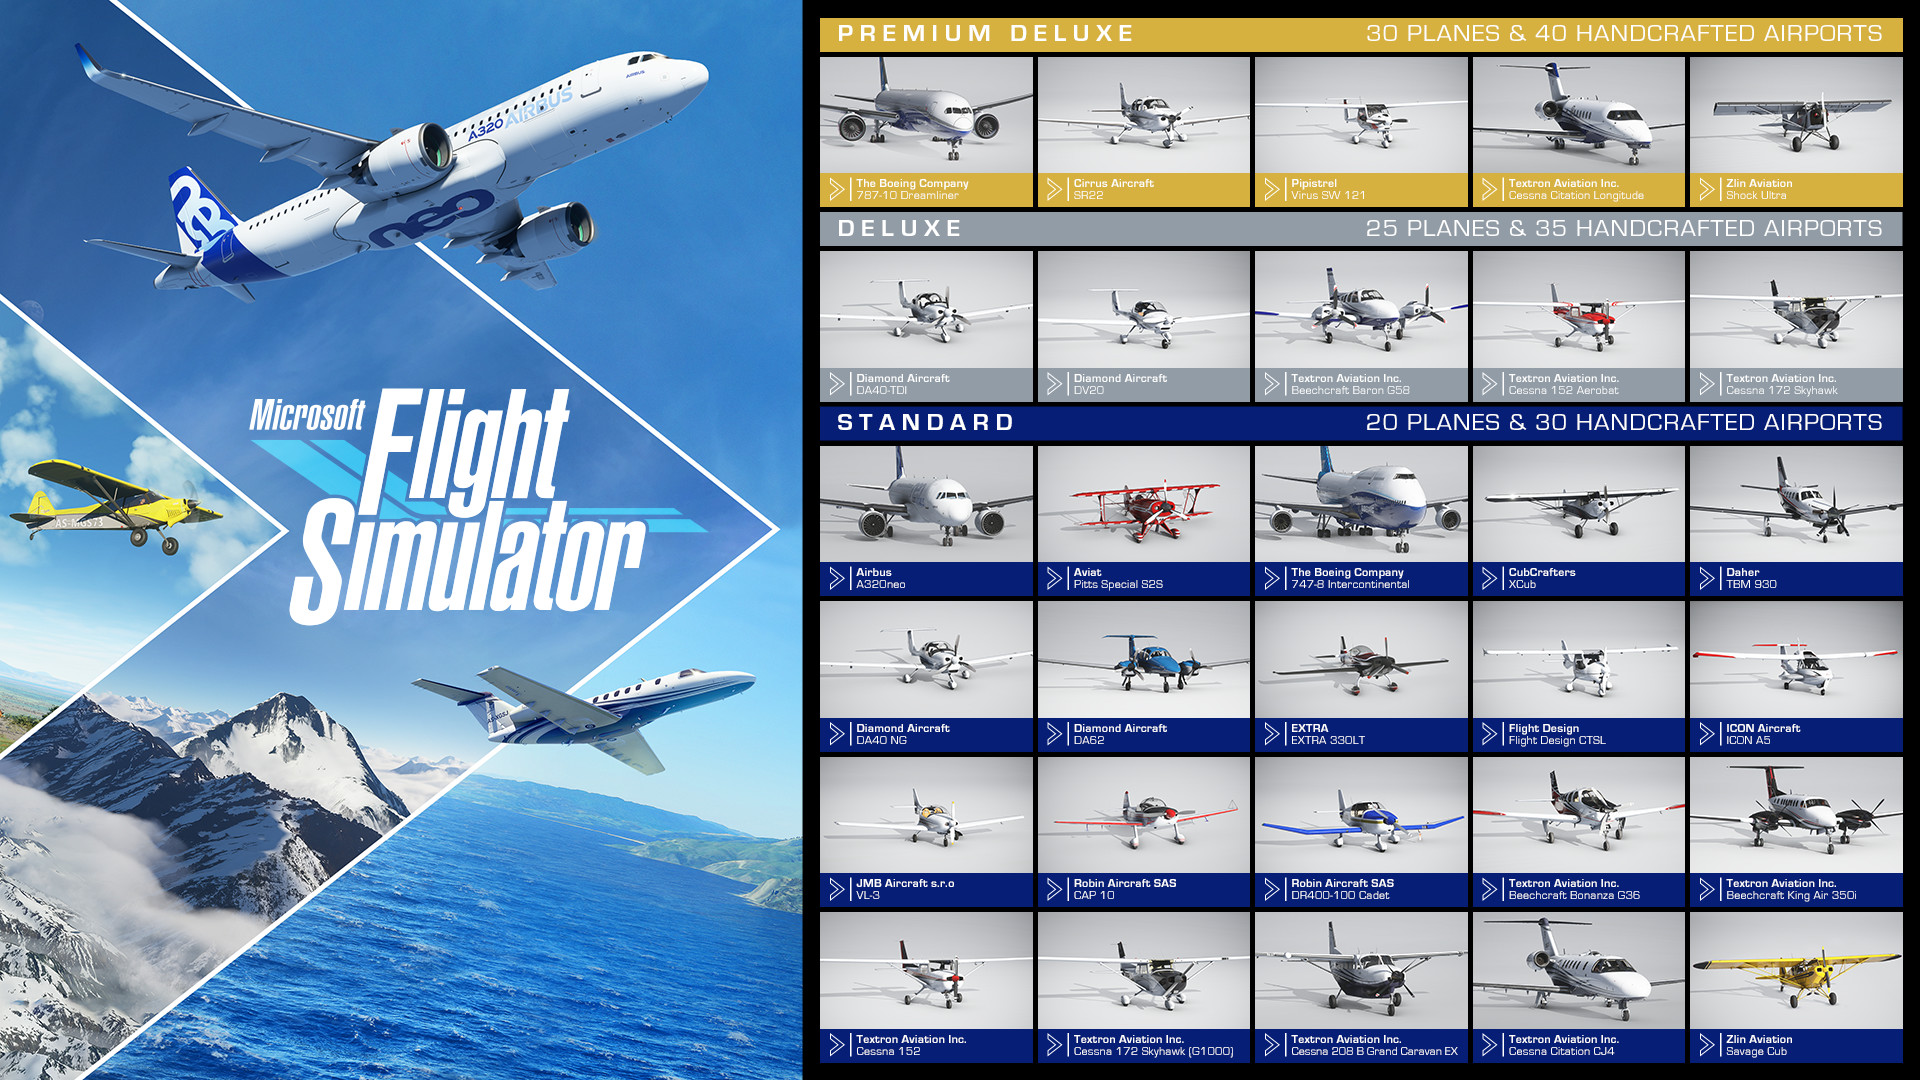 Microsoft Flight Simulator Premium Deluxe Game of the Year Edition EU Xbox Series X|S / Windows 10 CD Key, $102.81